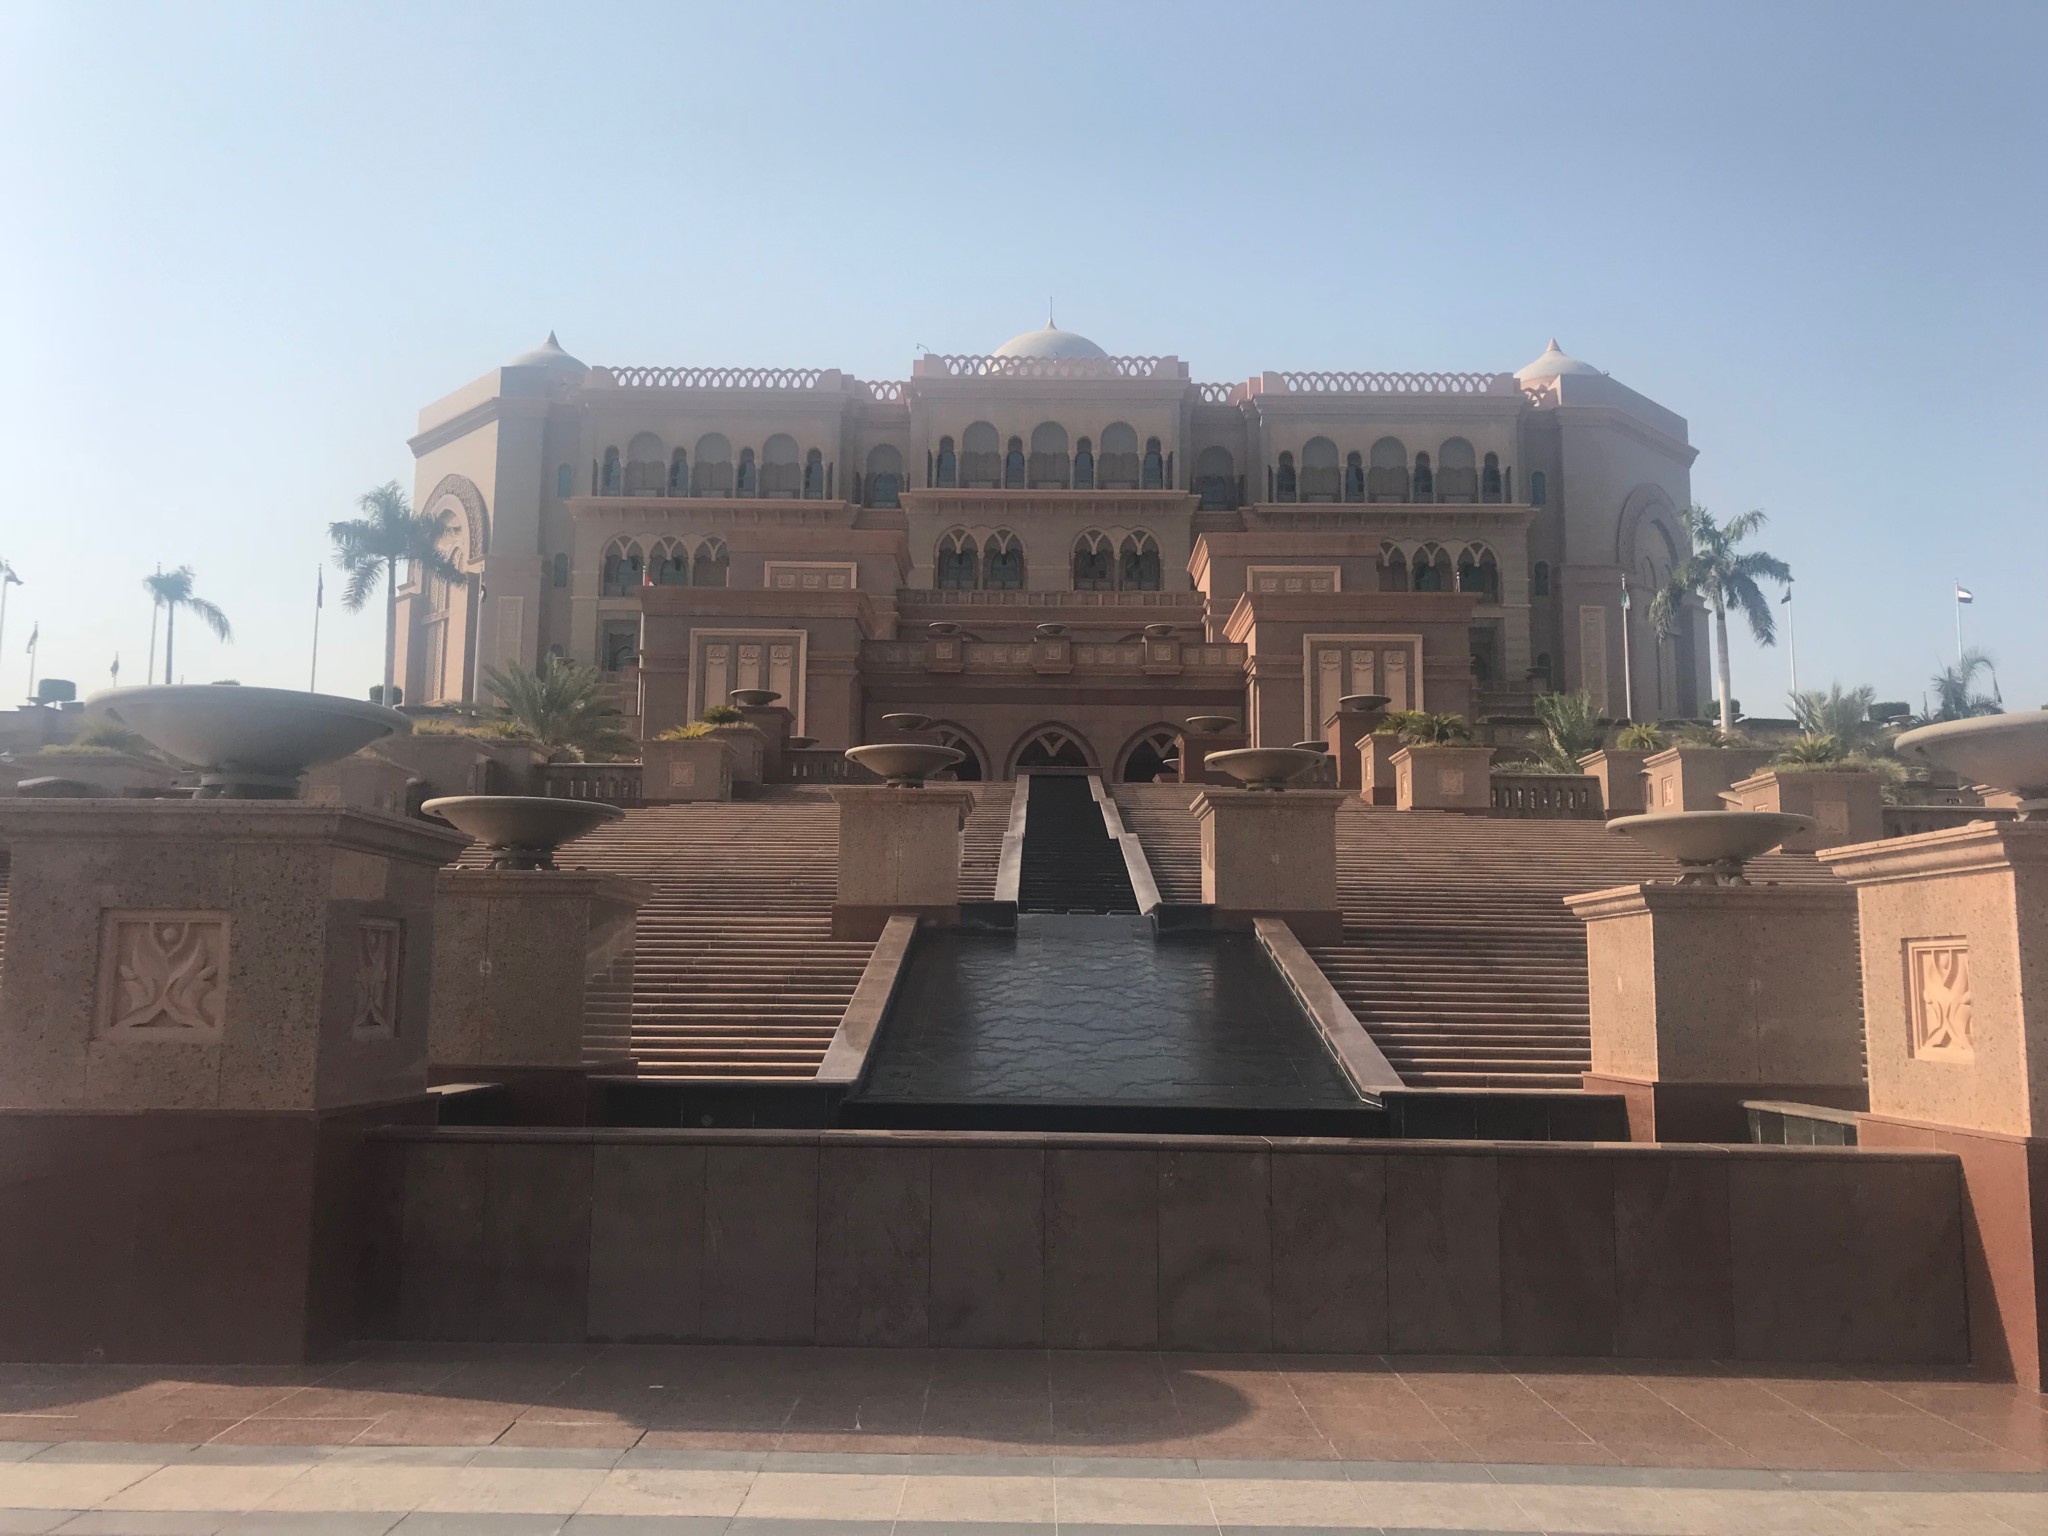 The Emirates Palace in Abu Dhabi.